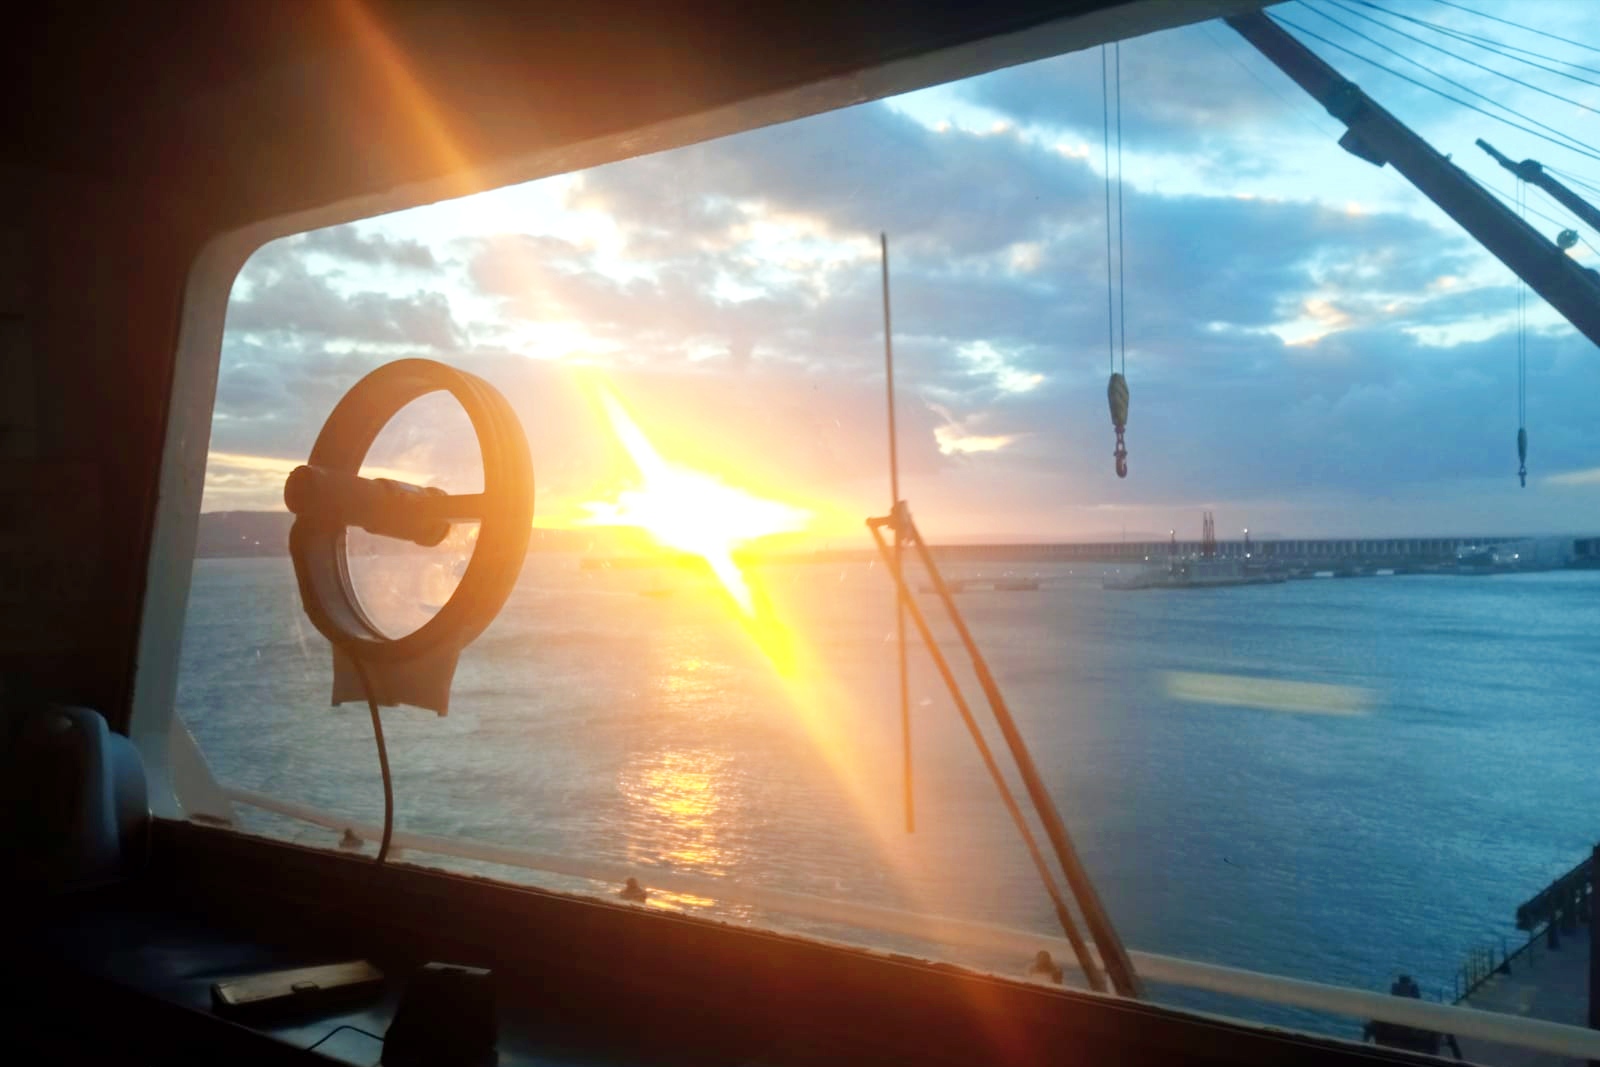 3. Sunset at La Coruna port Credits to Capt. Stylianos Bimpasis